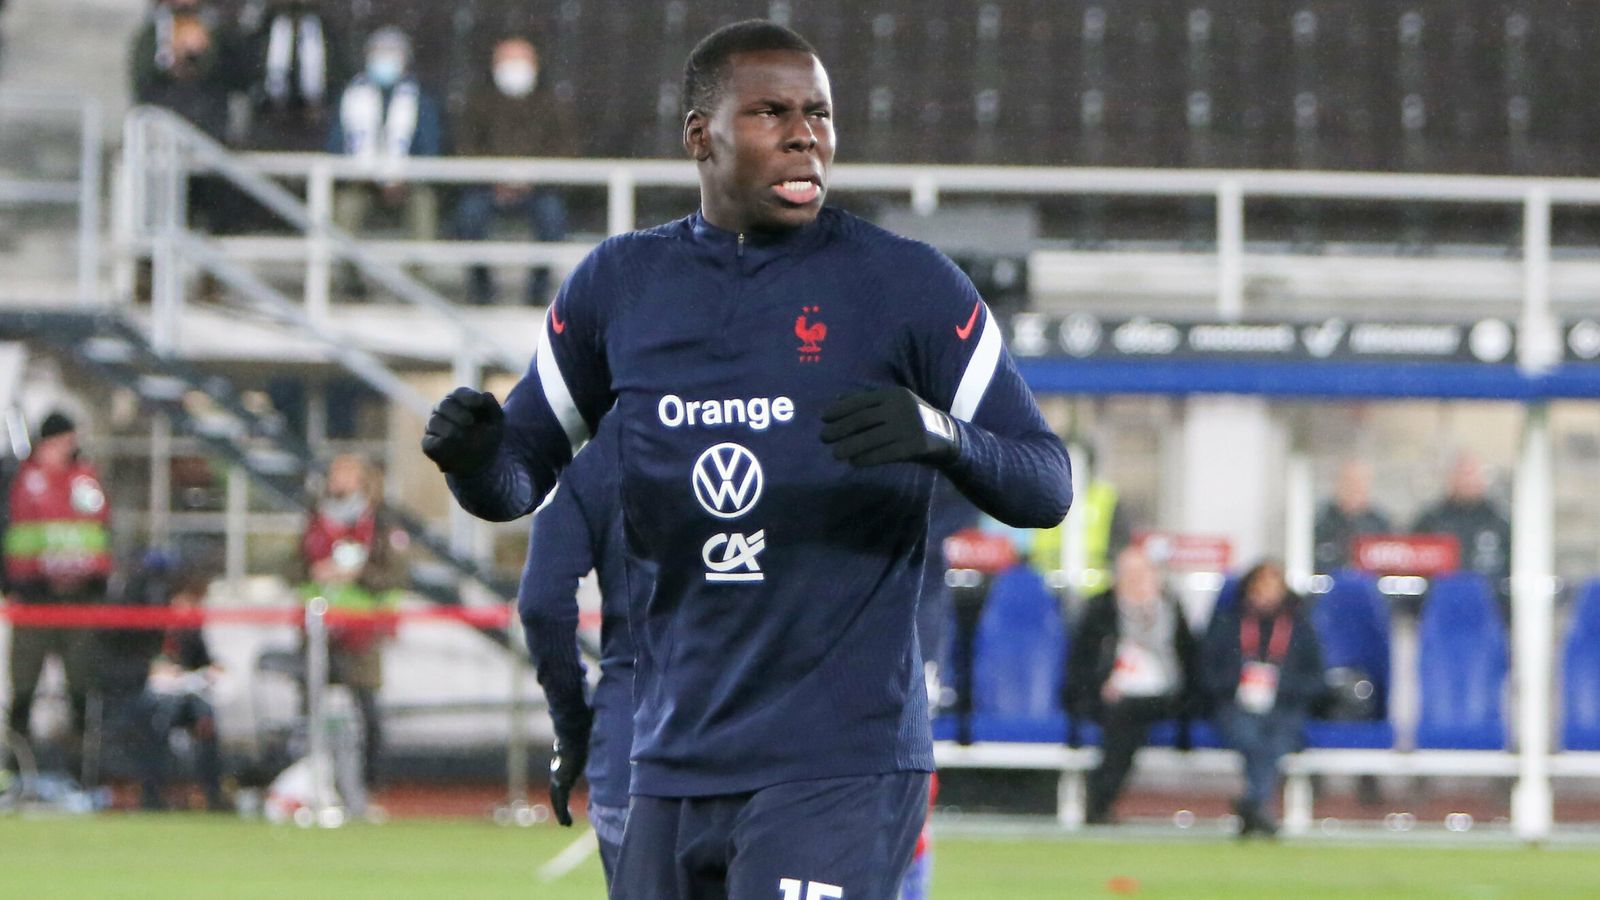 Football News: Zouma menace d’être exclu de l’équipe de France |  nouvelles du football